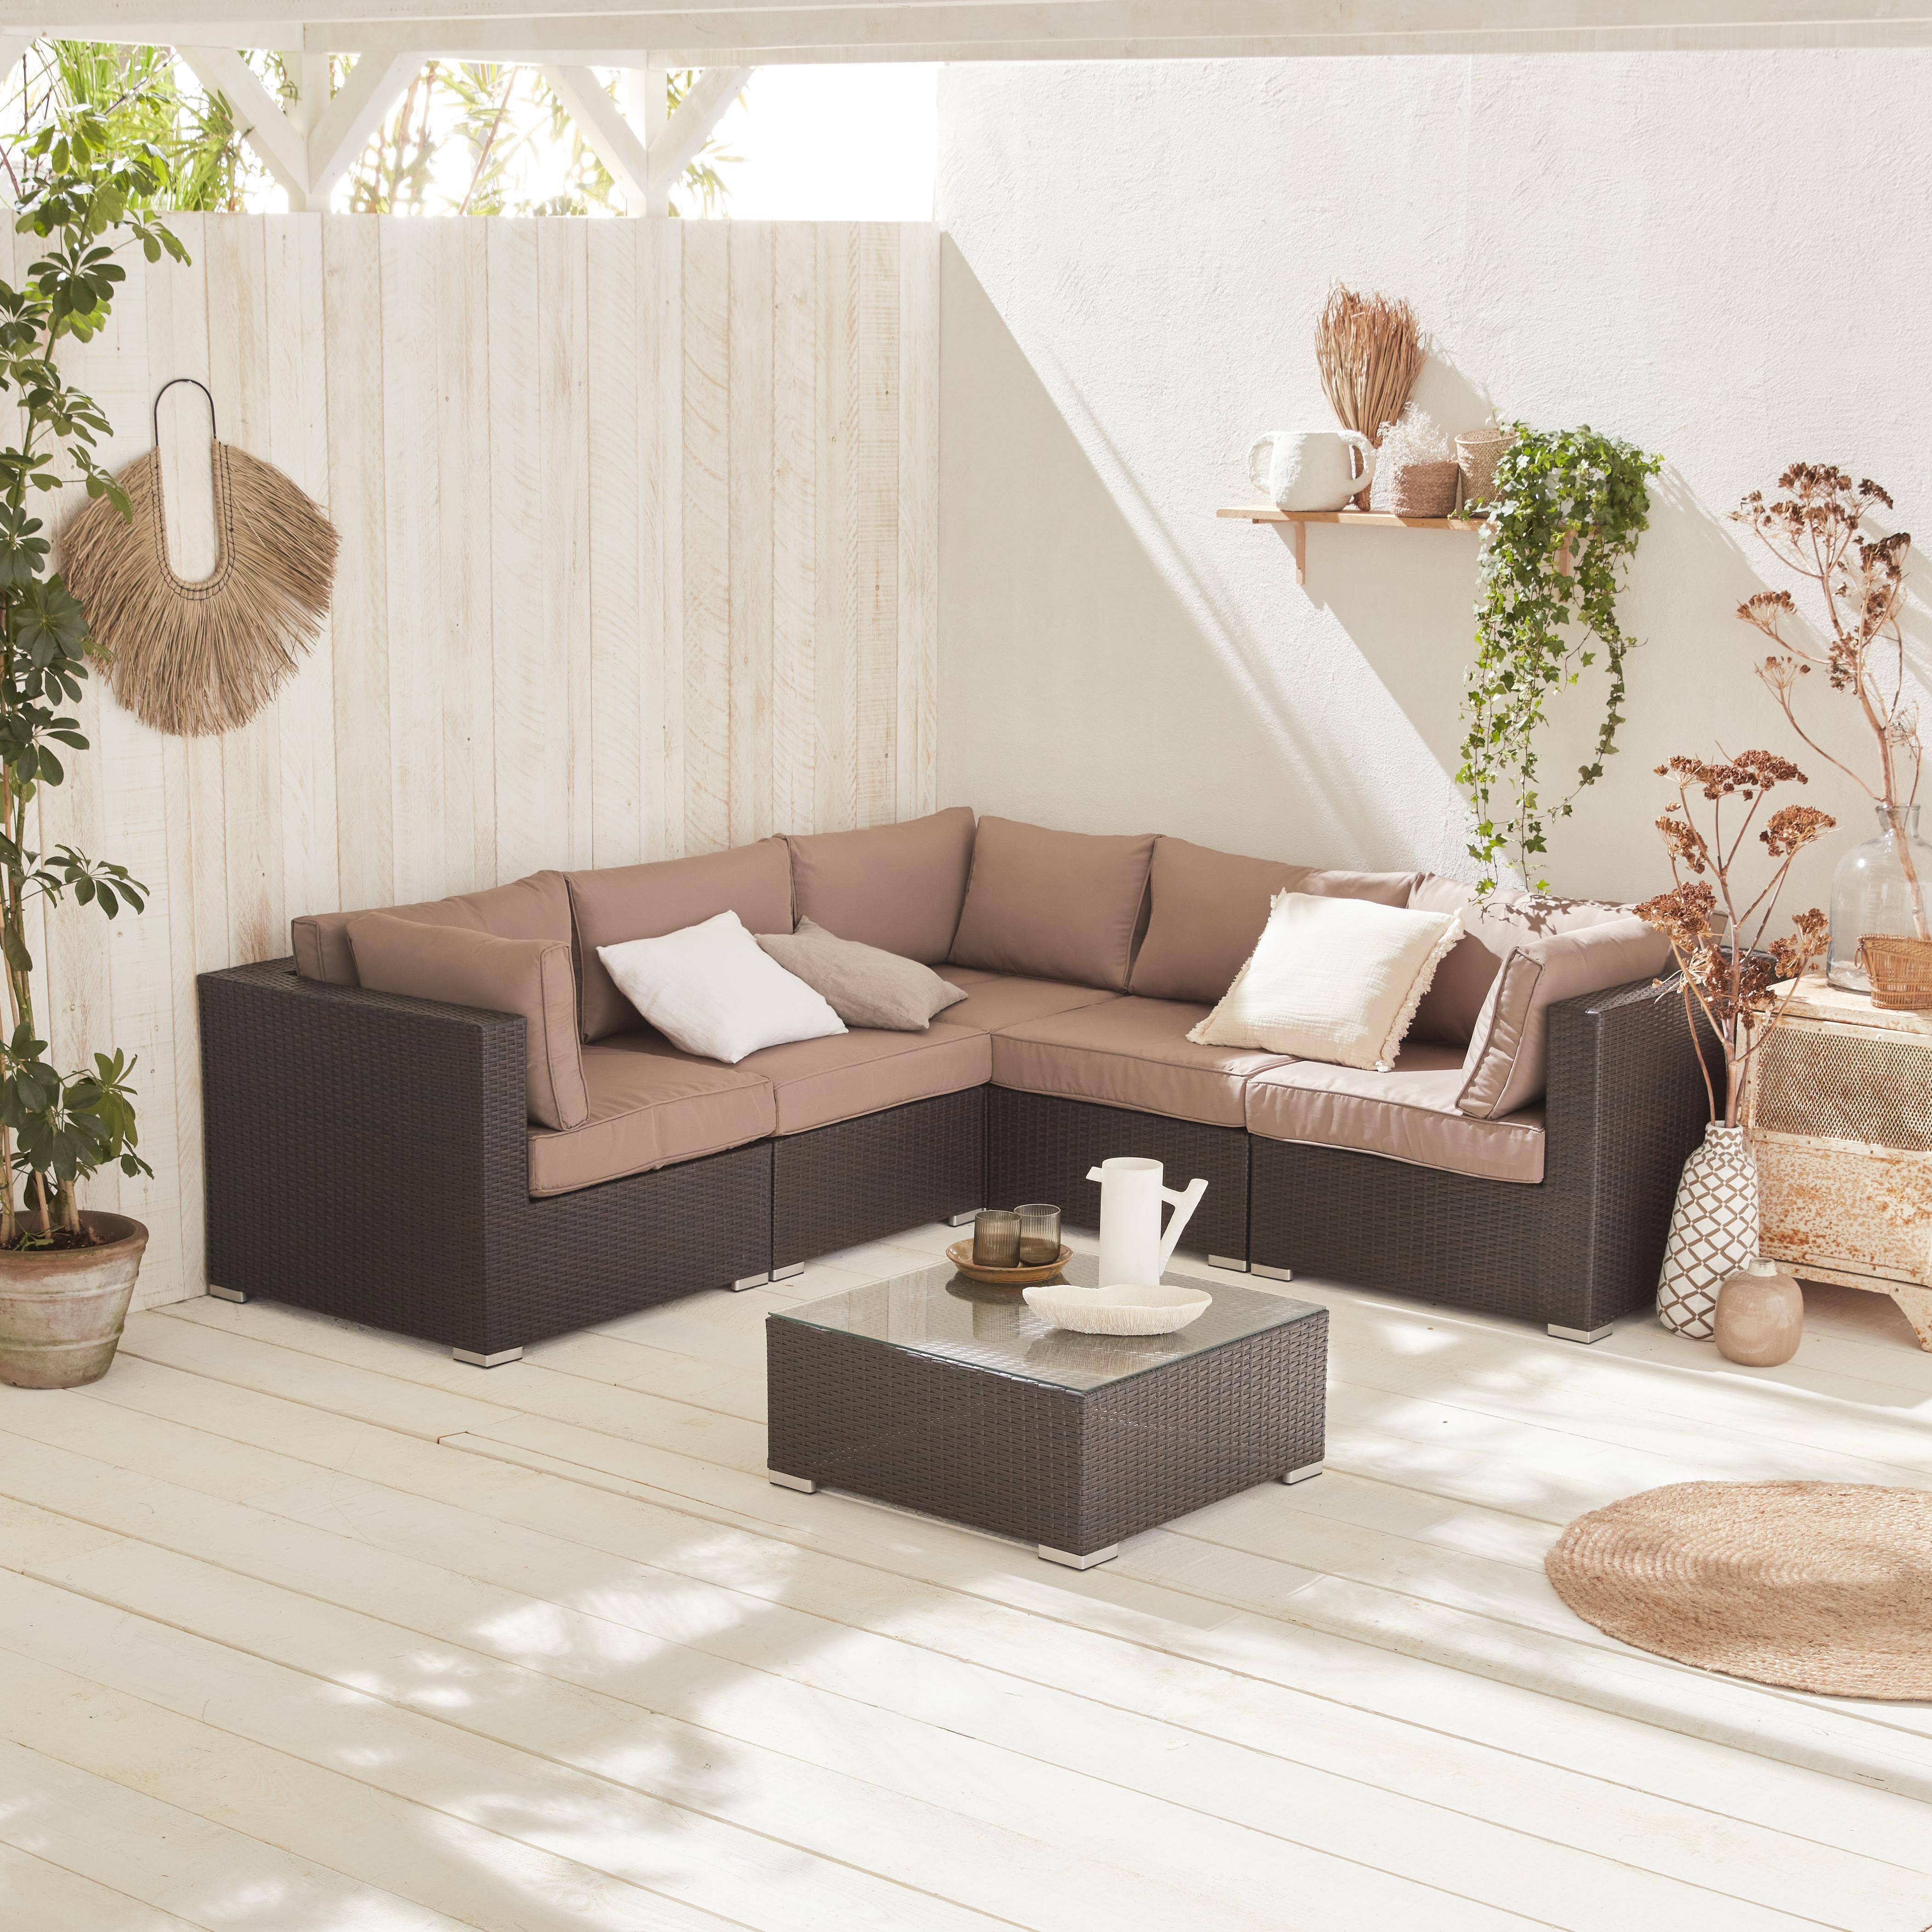 Muebles de jardin, conjunto sofa de exterior, Marron Marron, 5 plazas, ratan sintetico, resina trenzada - NAPOLI Photo1